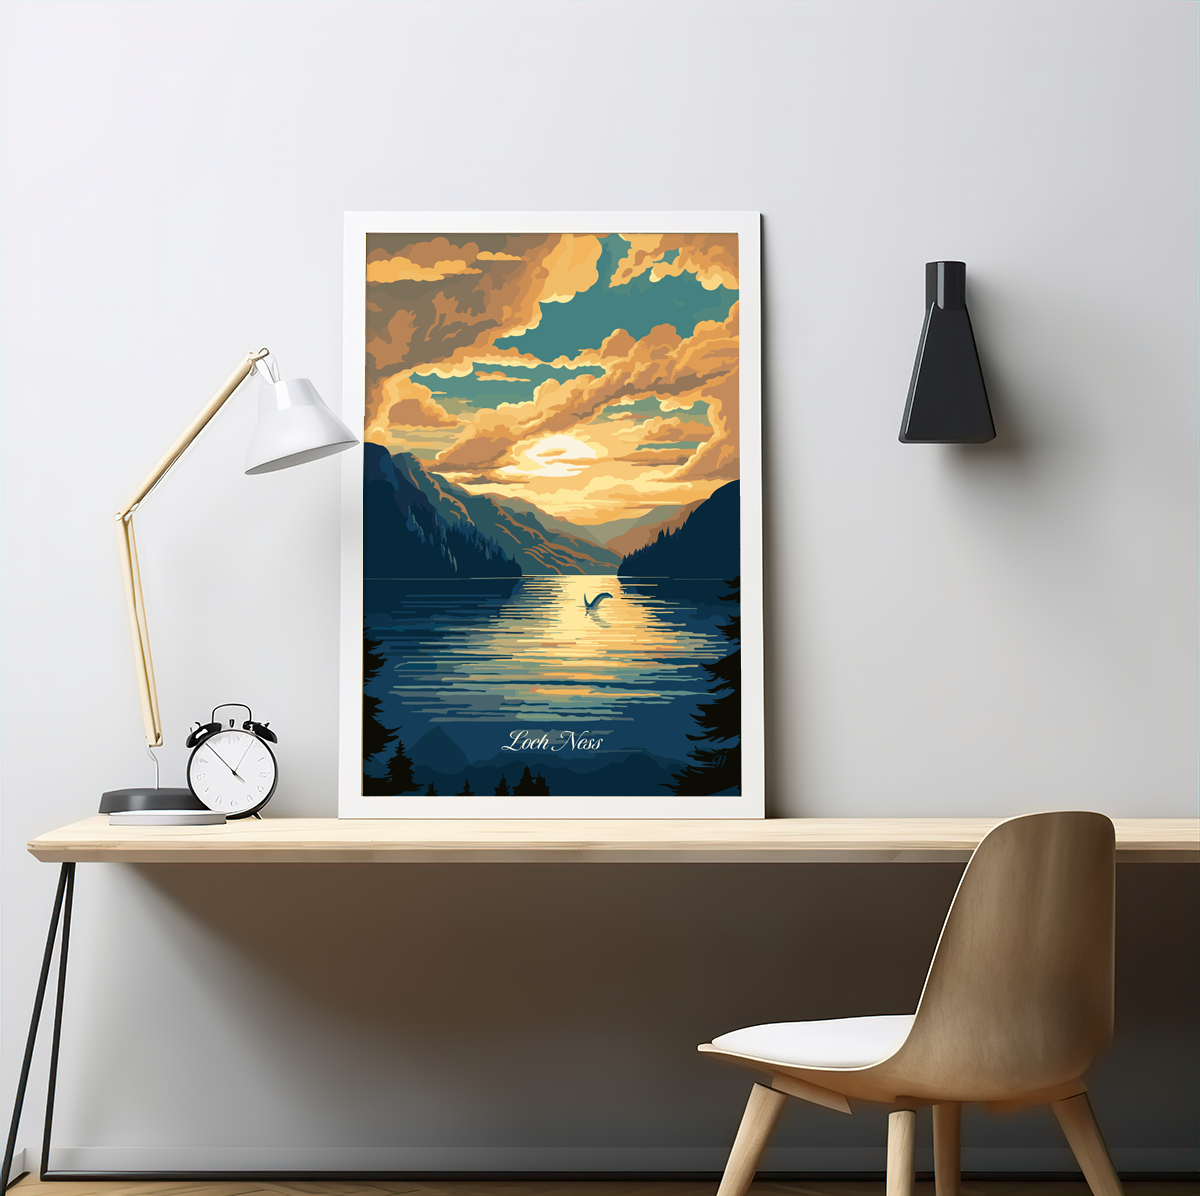 Loch Ness poster by bon voyage design